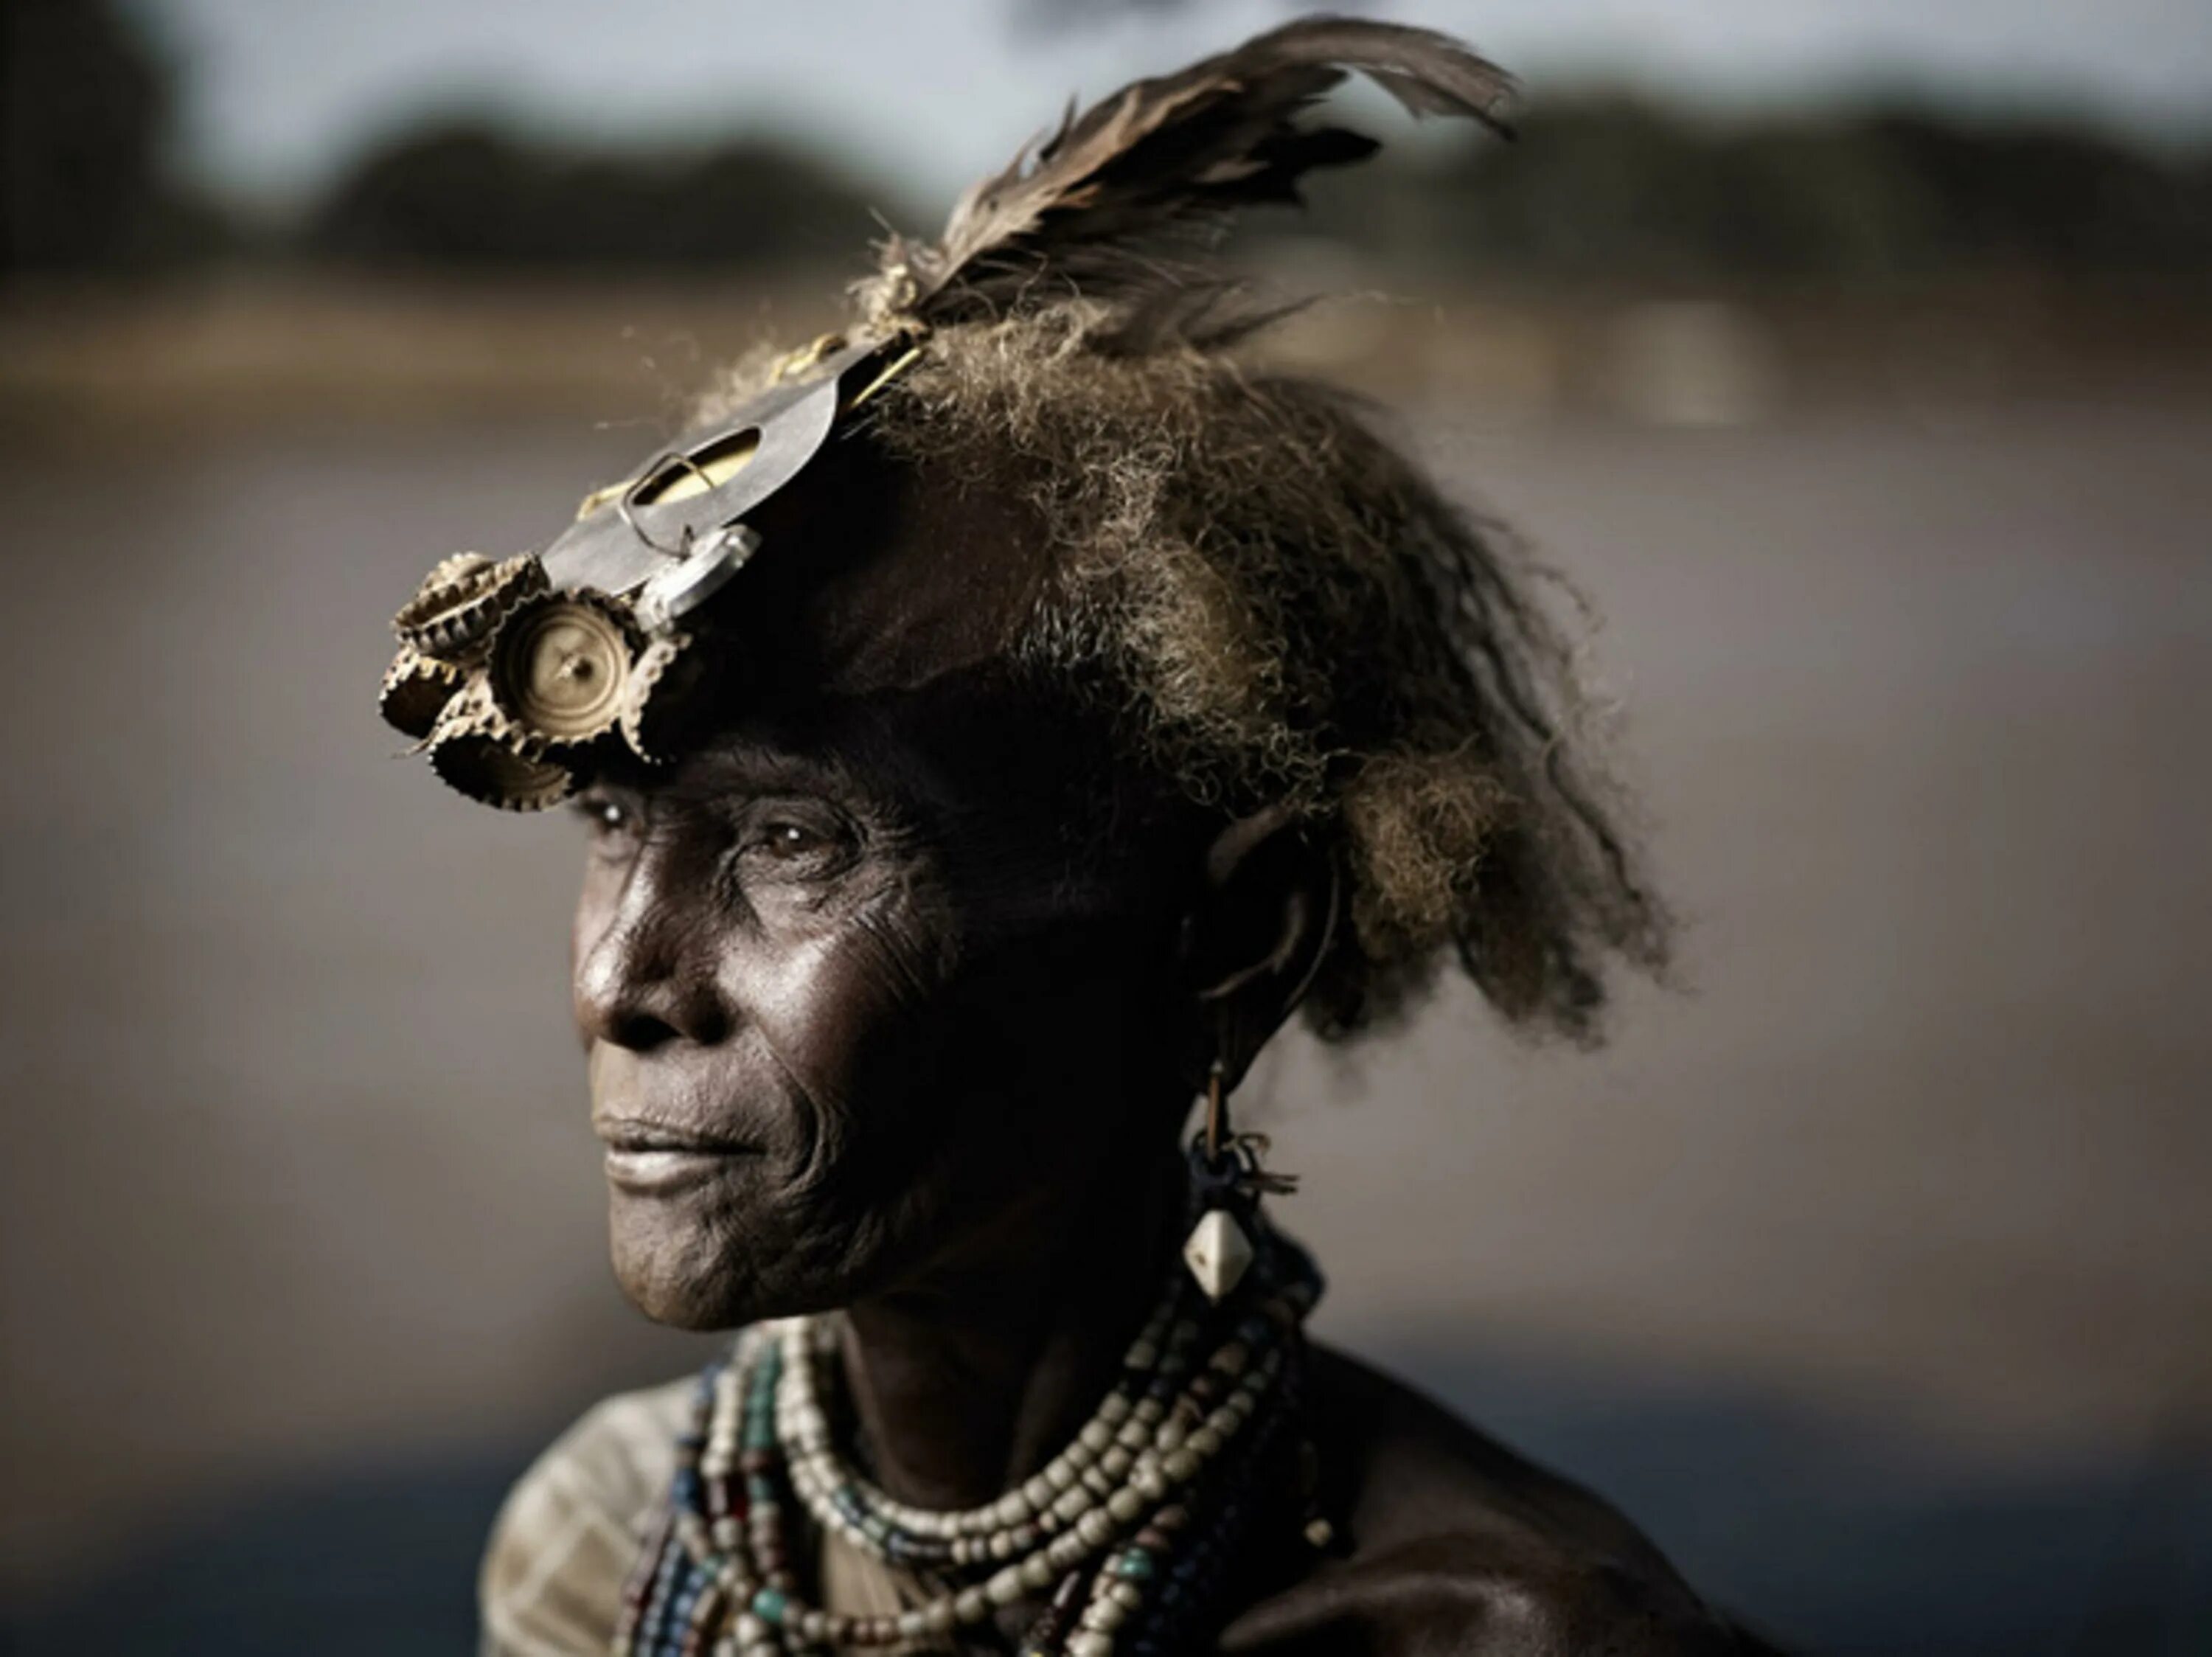 Племя знаменитая. Племя дасанеч. Африканские племена.